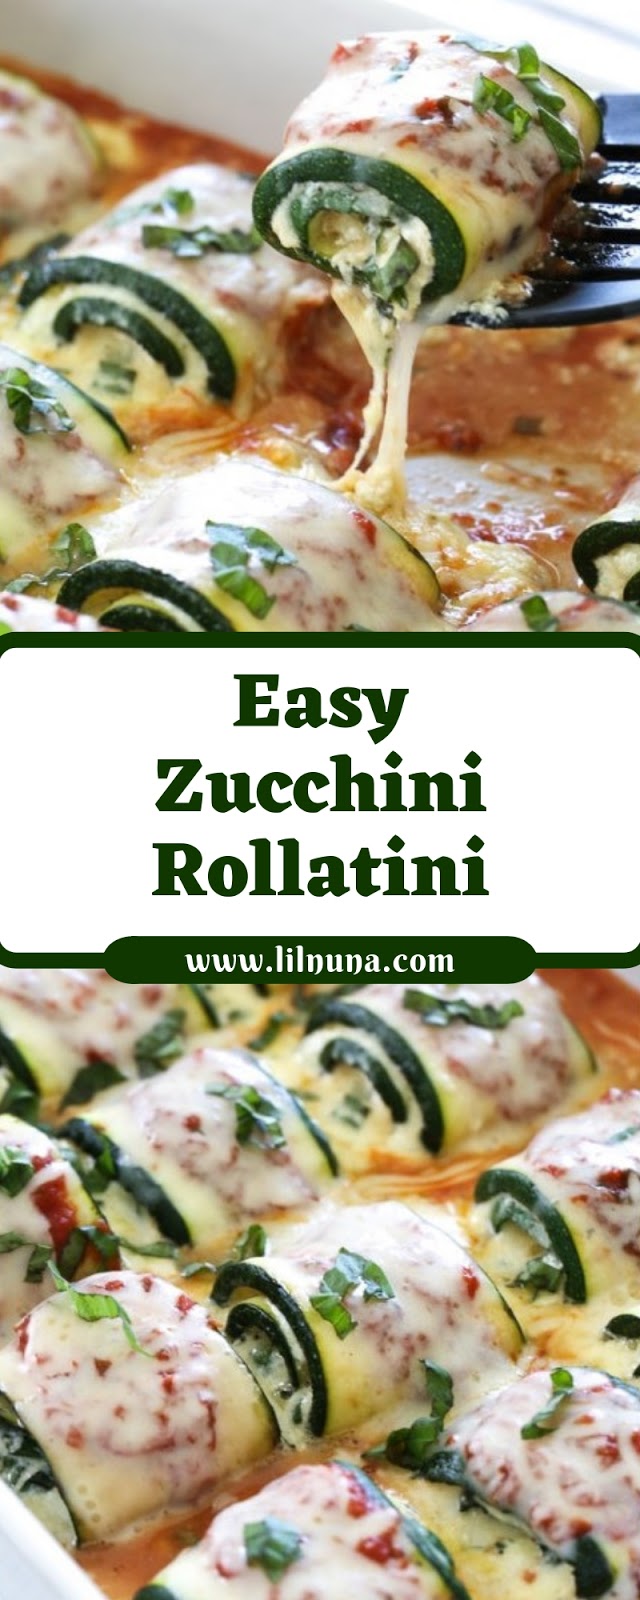 Easy Zucchini Rollatini